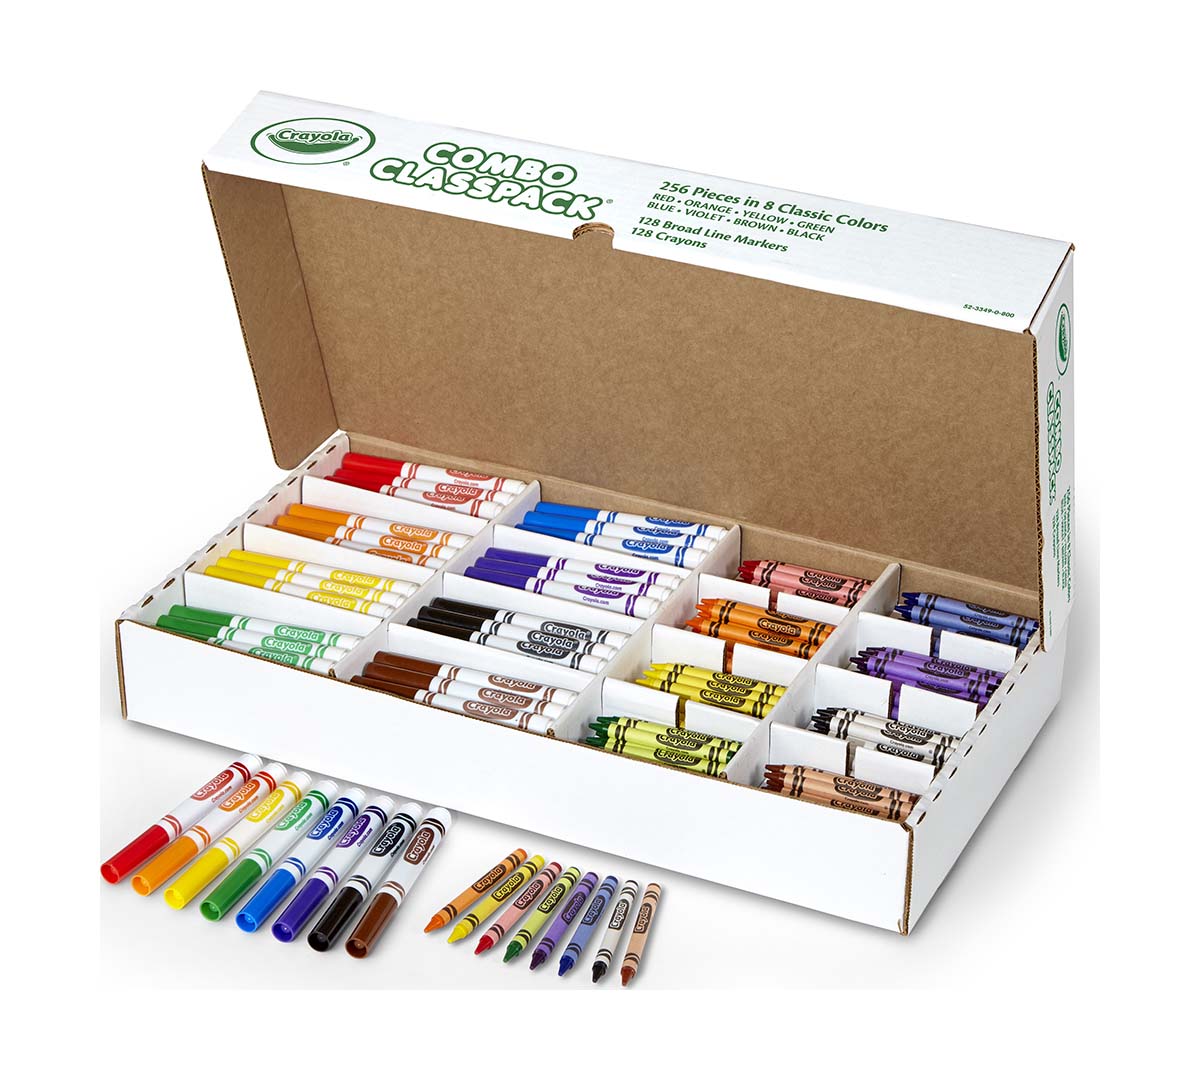 Download Bulk Markers & Crayons, 256 Count Classpack | Crayola.com | Crayola